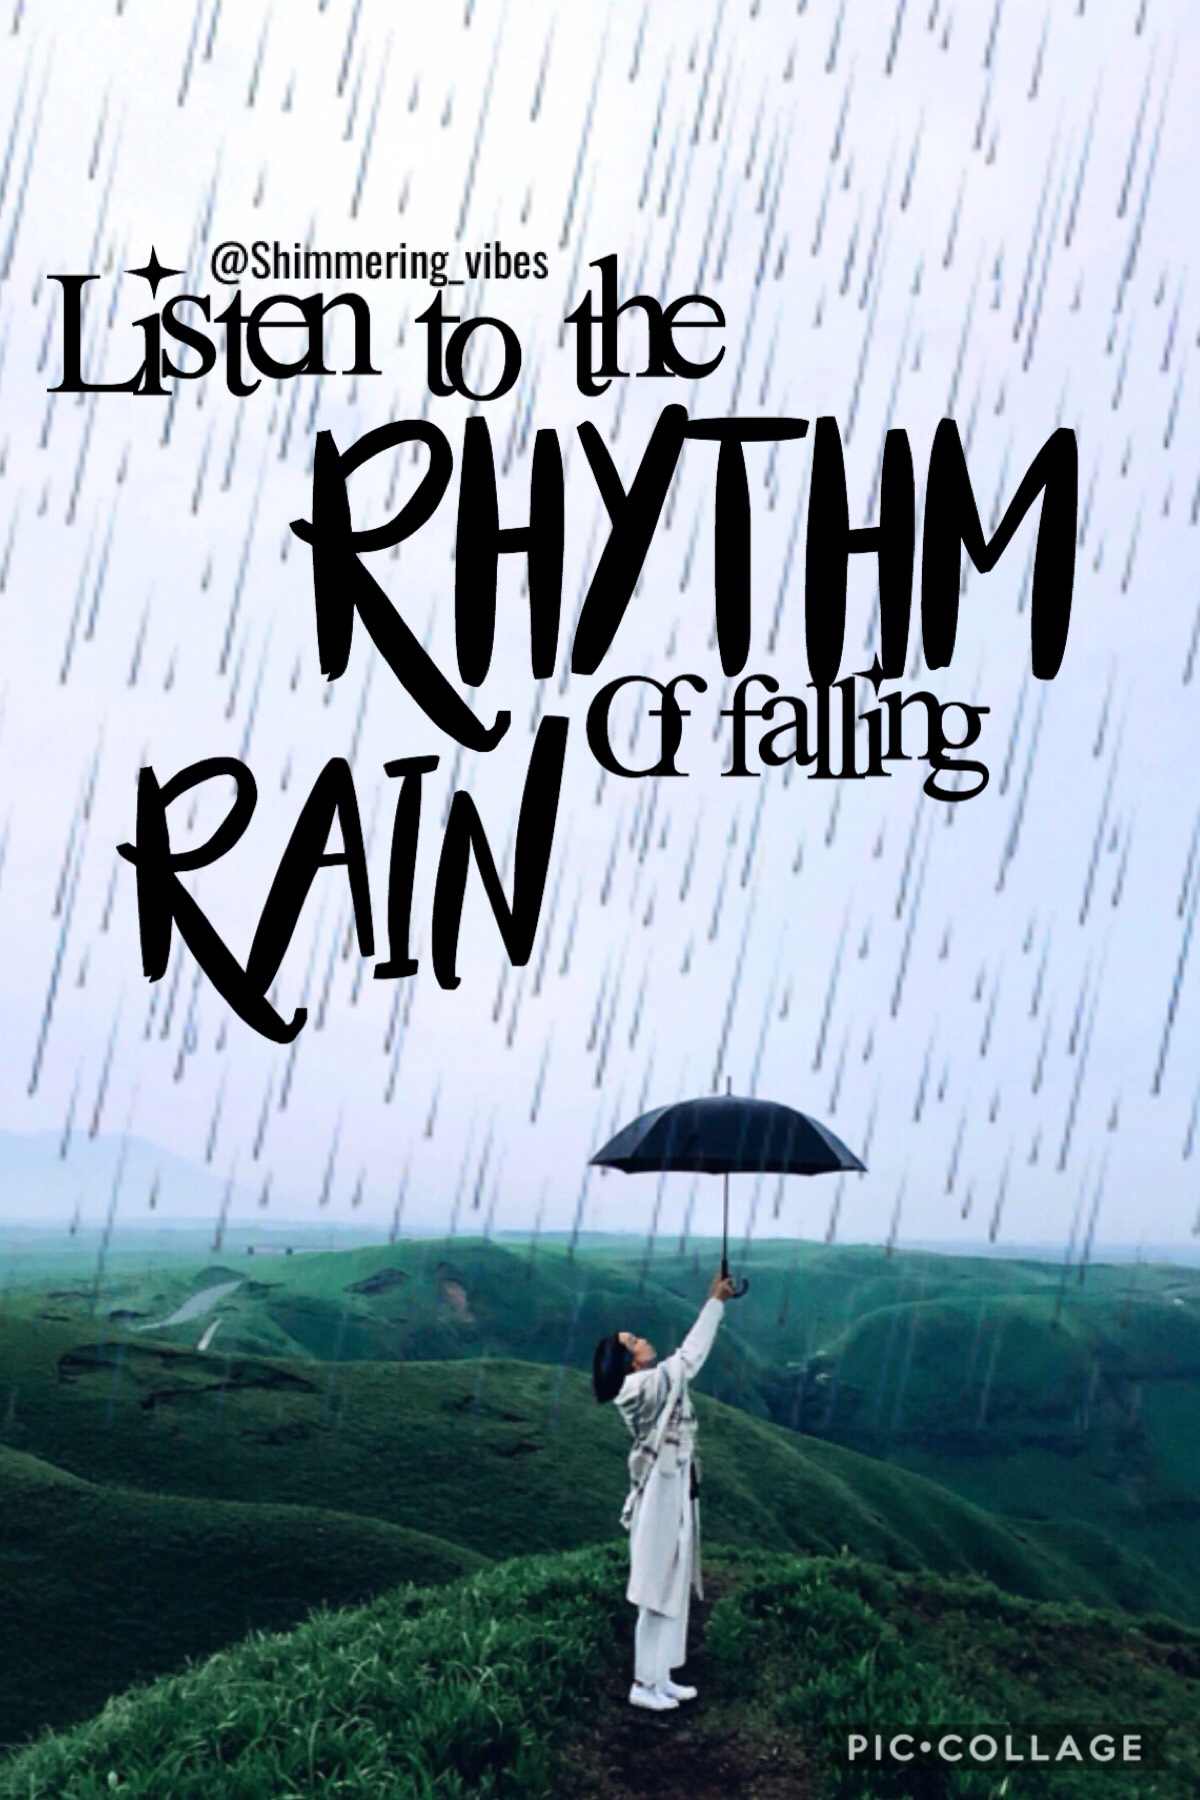 Listen to the rhythm of the falling rain